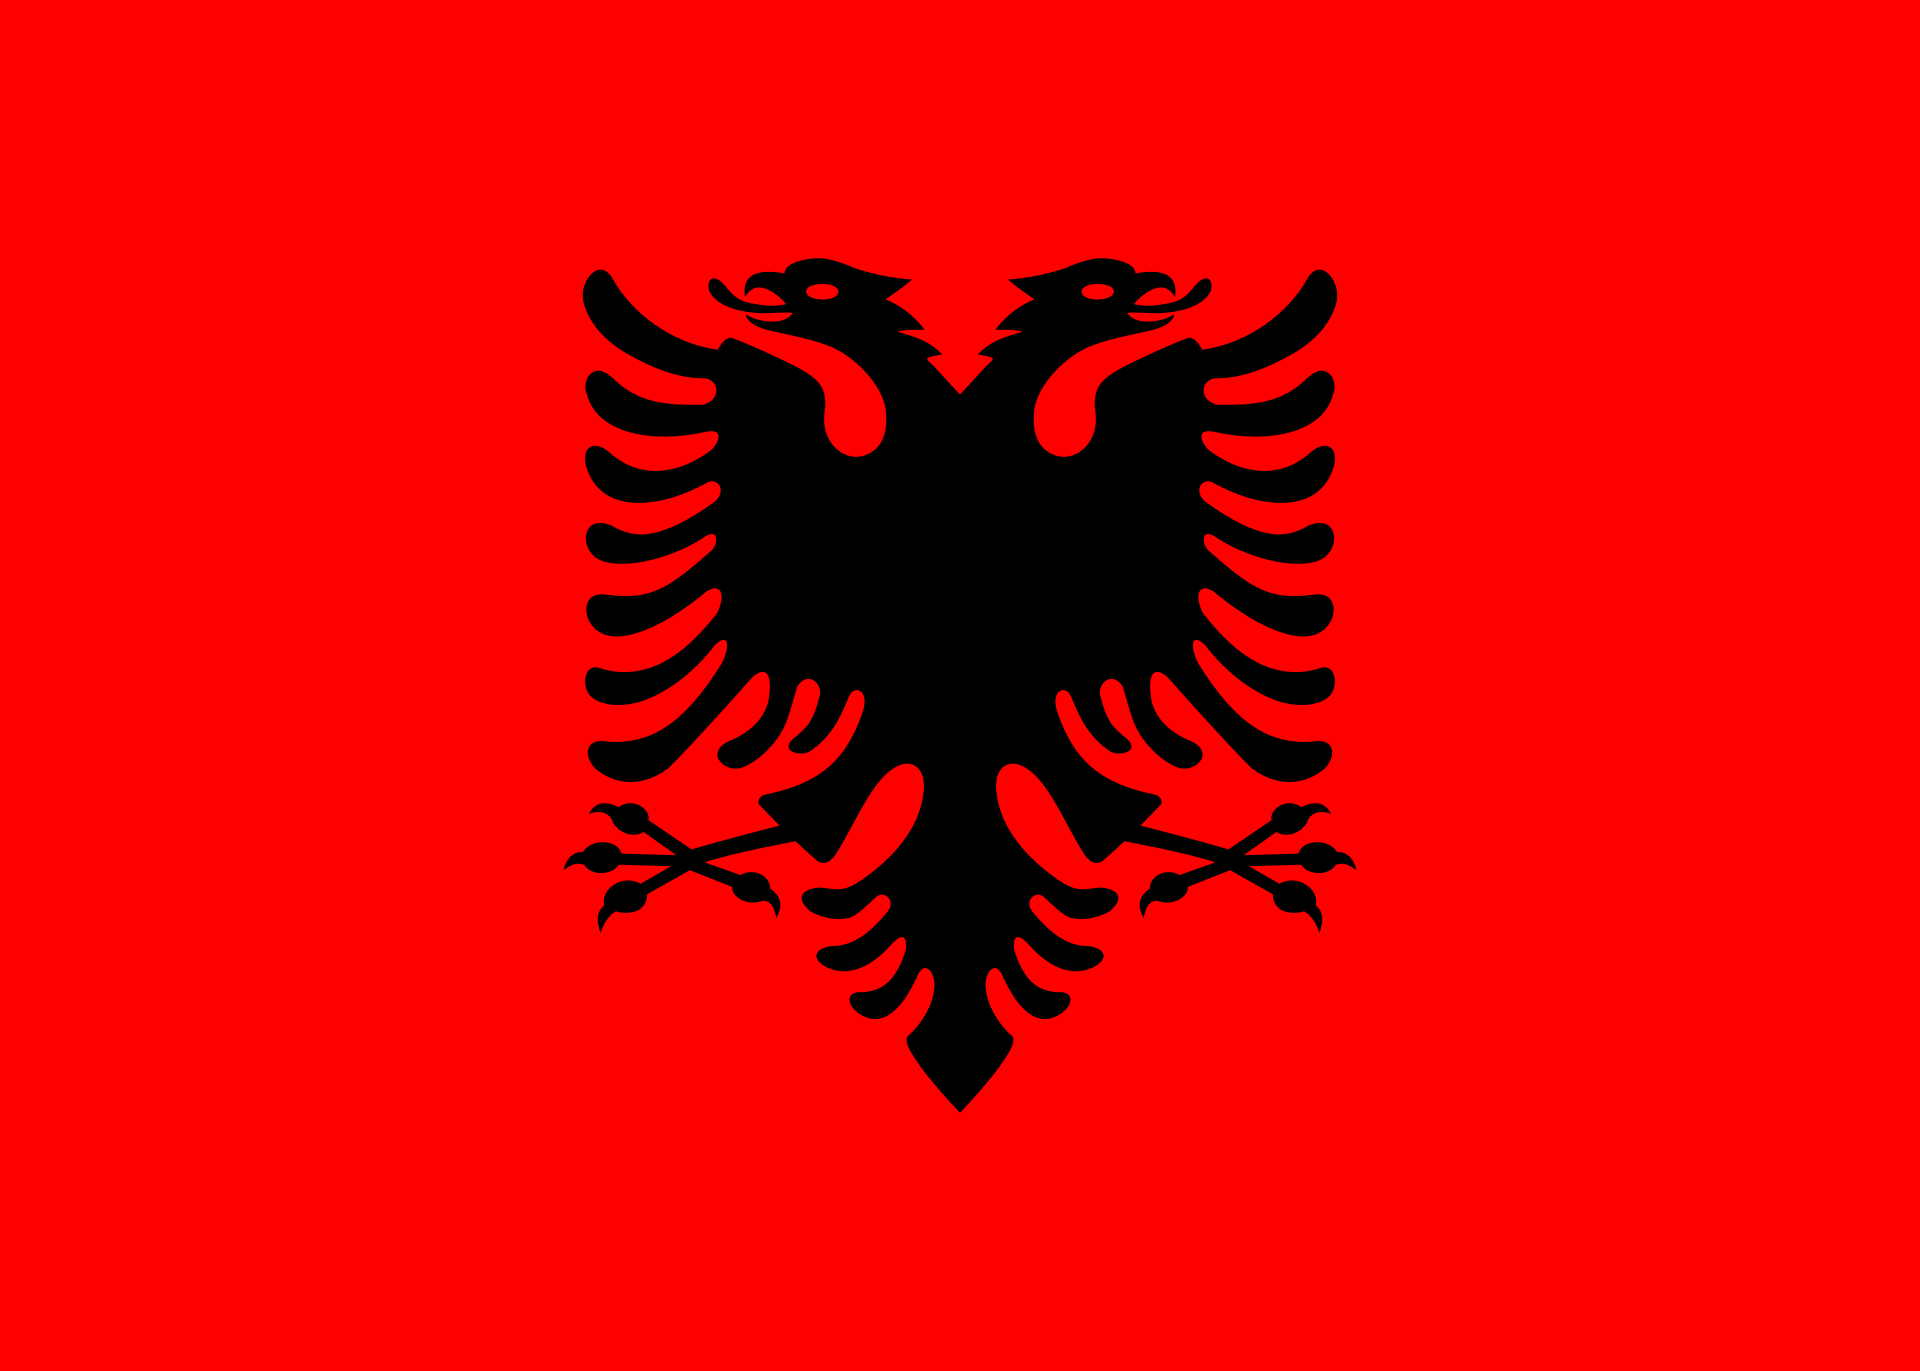 Quốc kỳ Albania